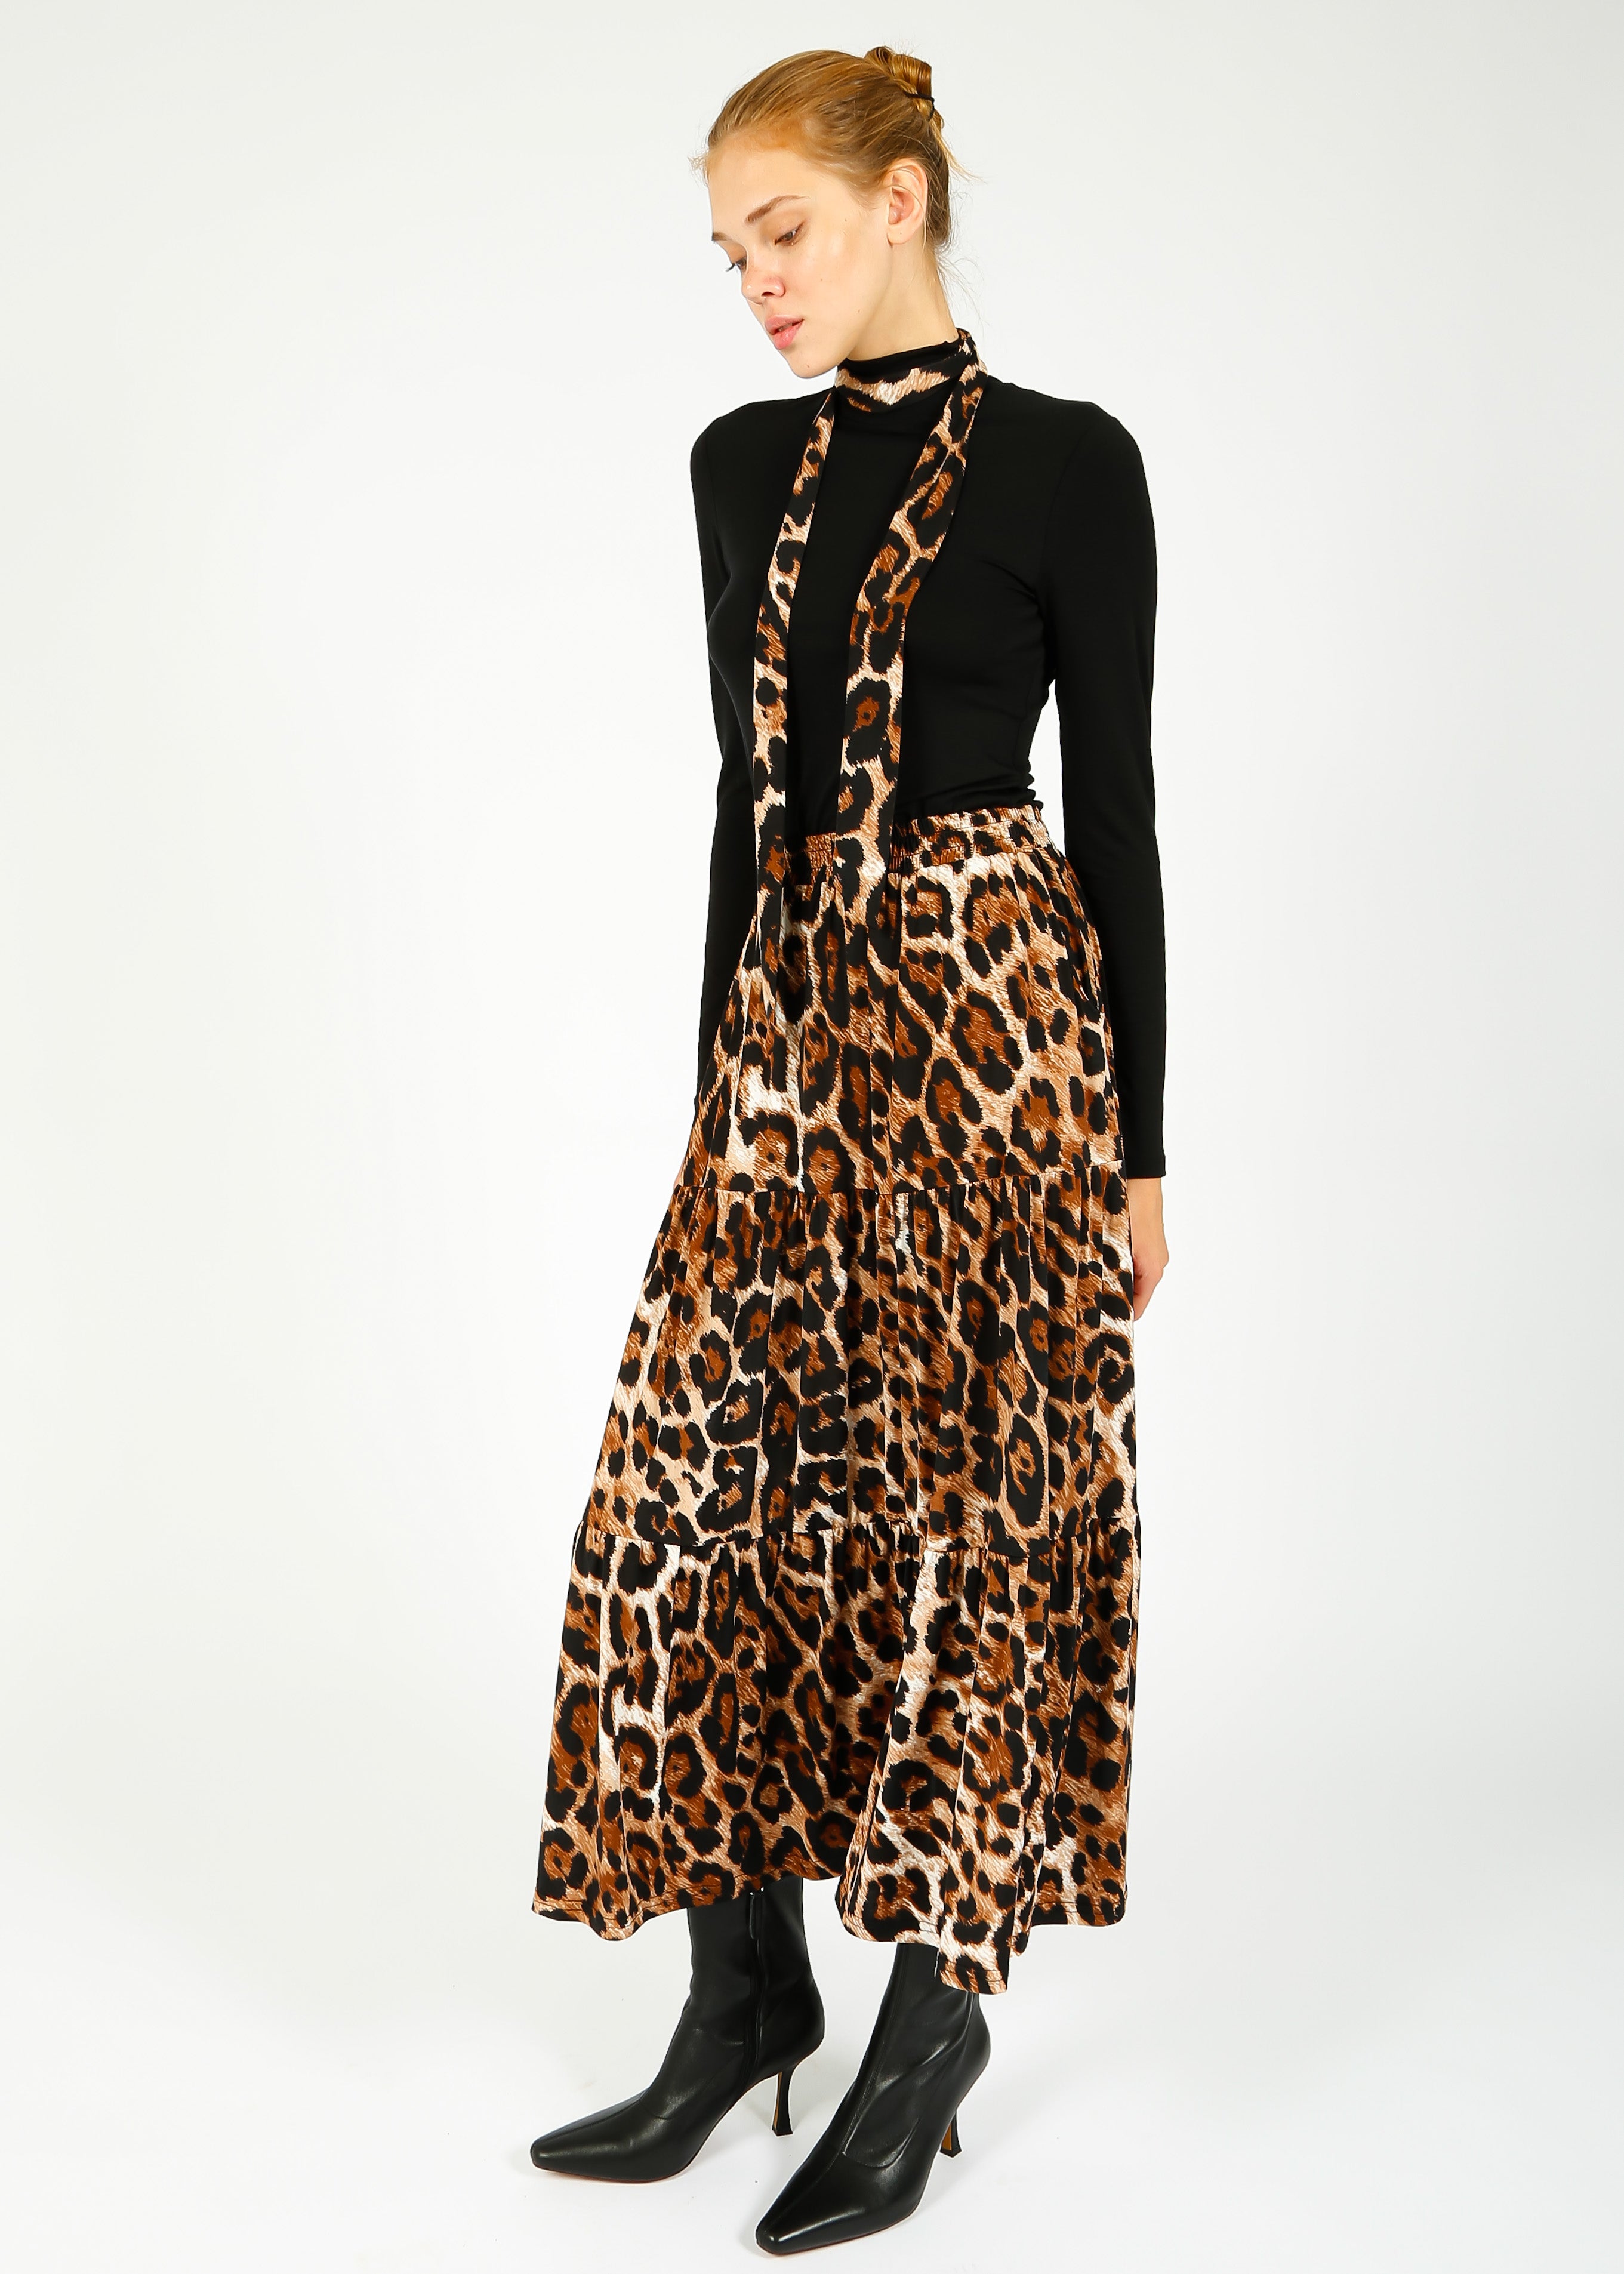 ONJENU Griffin Skirt in Leopard – shopatanna